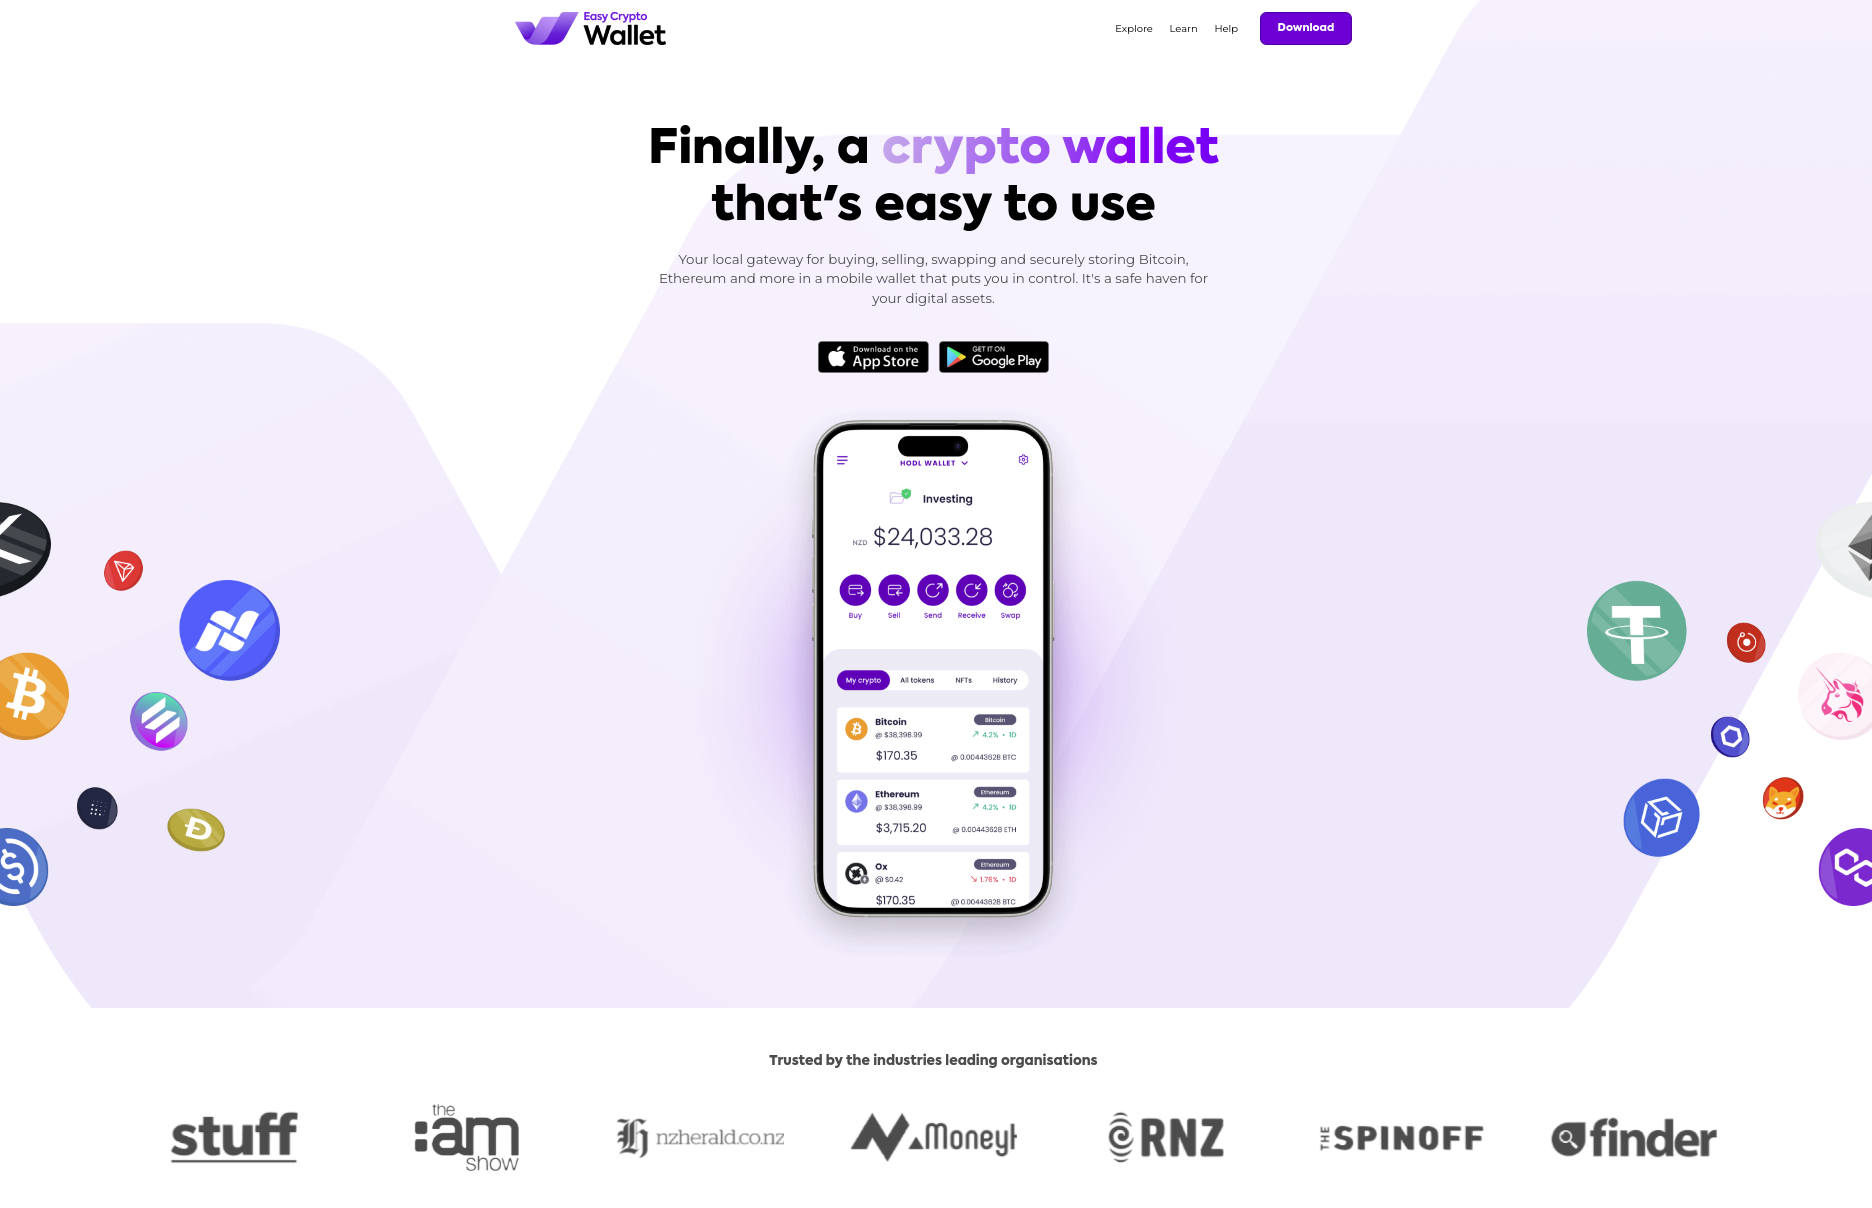 Screenshot of Easy Crypto Wallet homepage